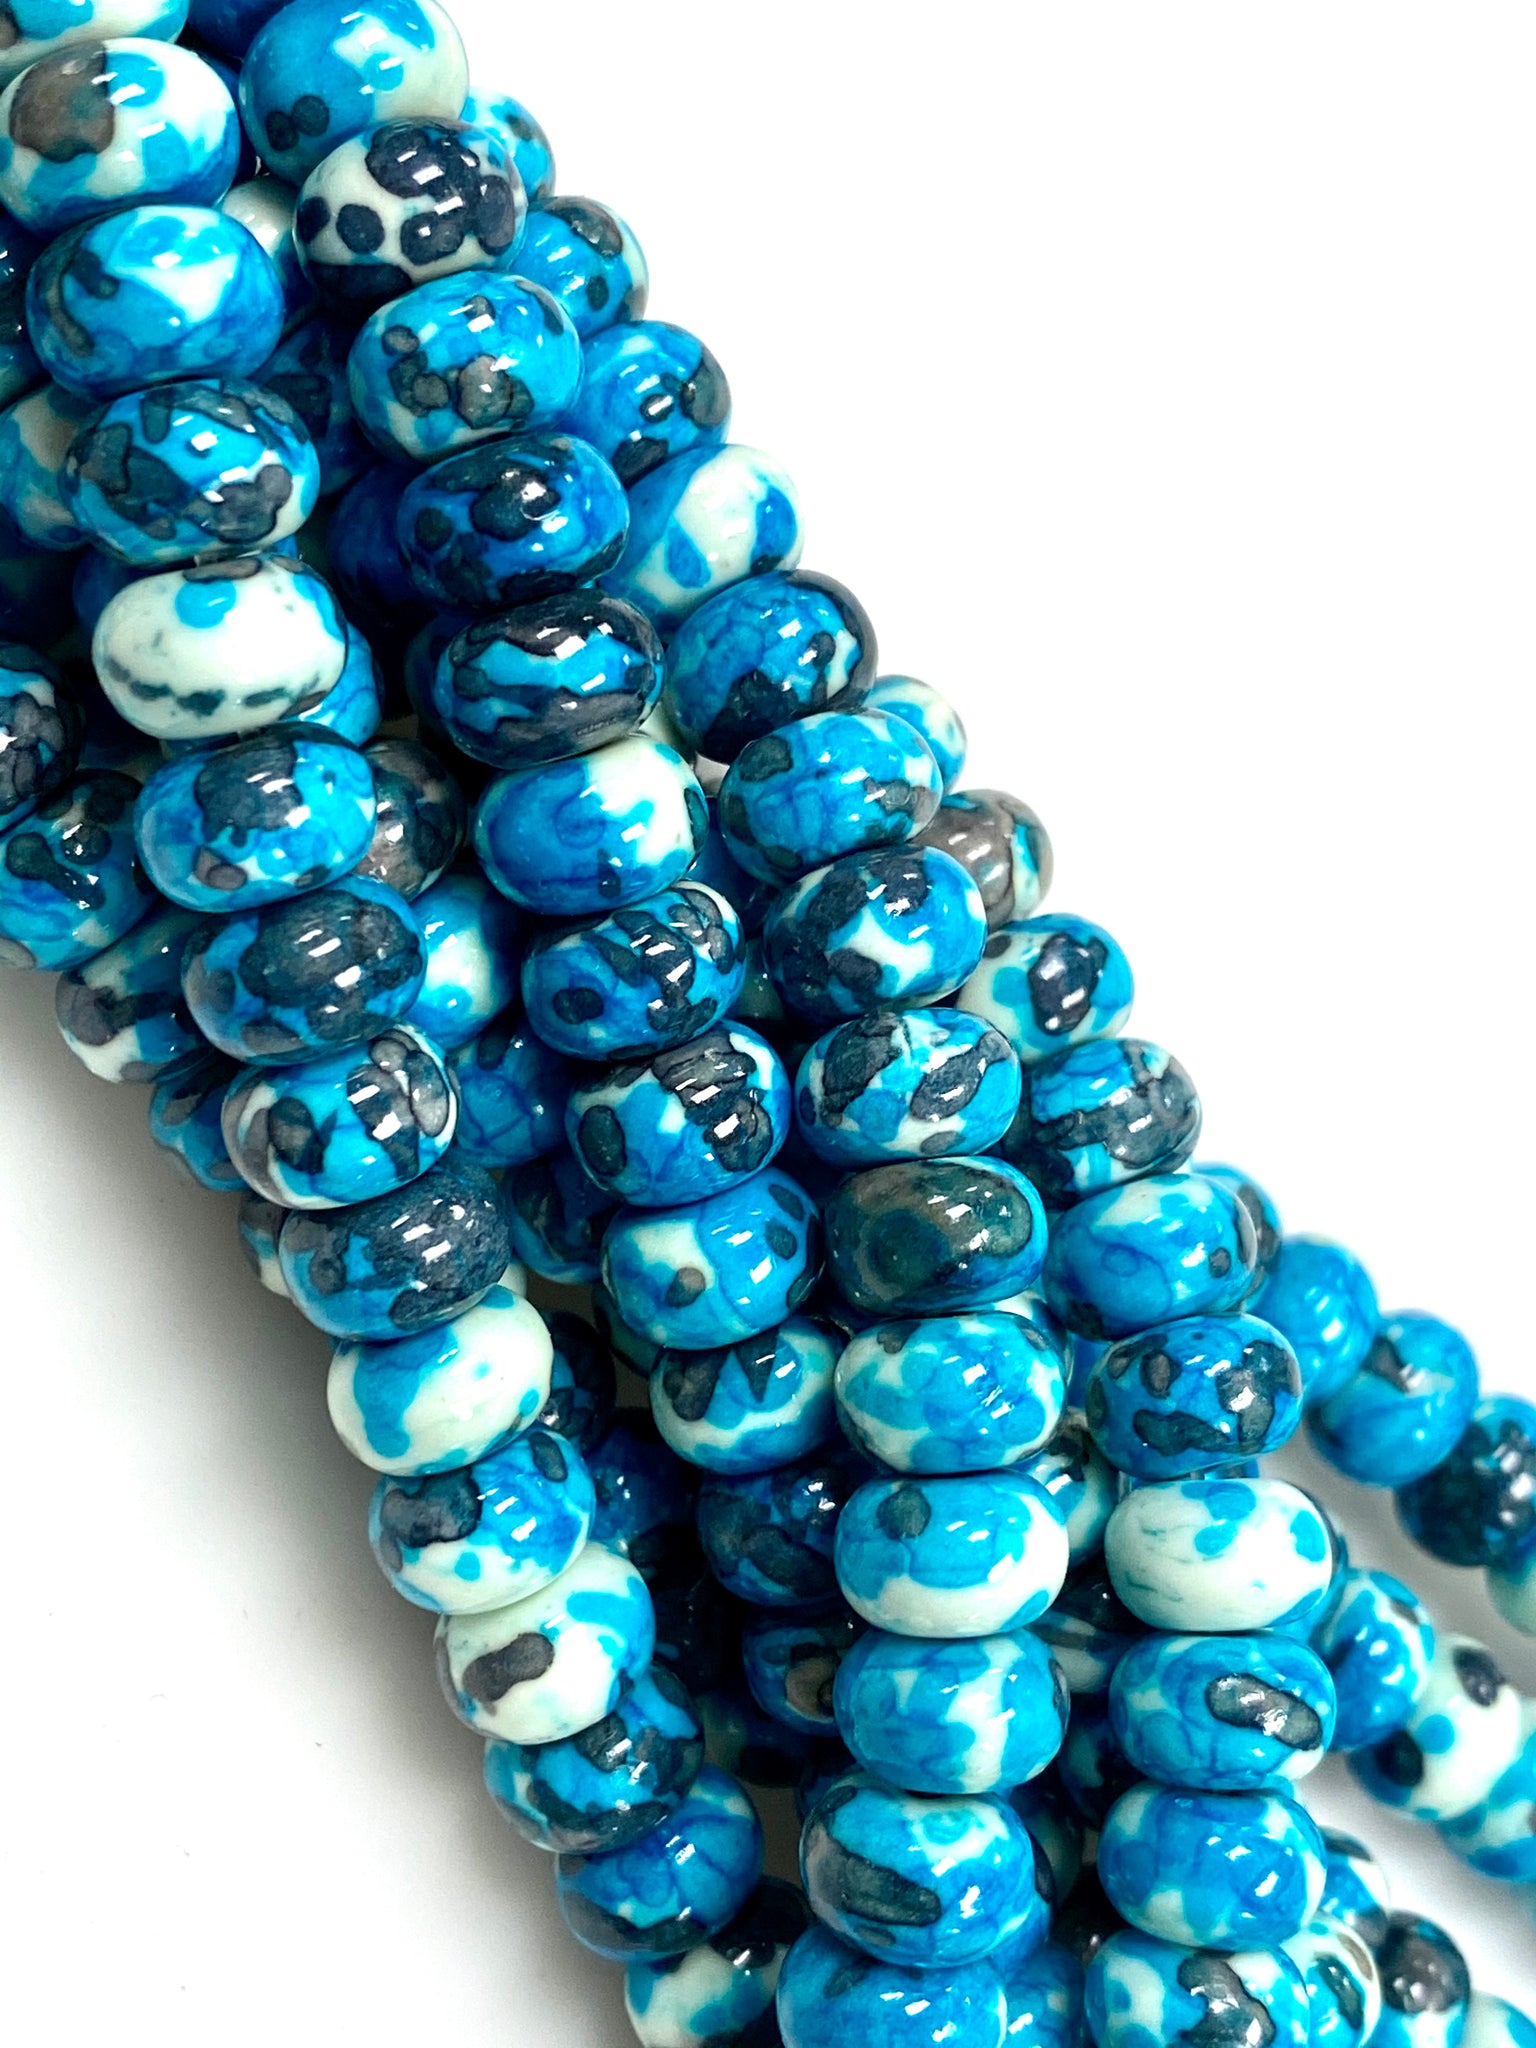 Natural Rain Jasper Beads / Faceted Rondelle Shape Beads / Healing Energy Stone Beads / 8mm 2 Strand Gemstone Beads